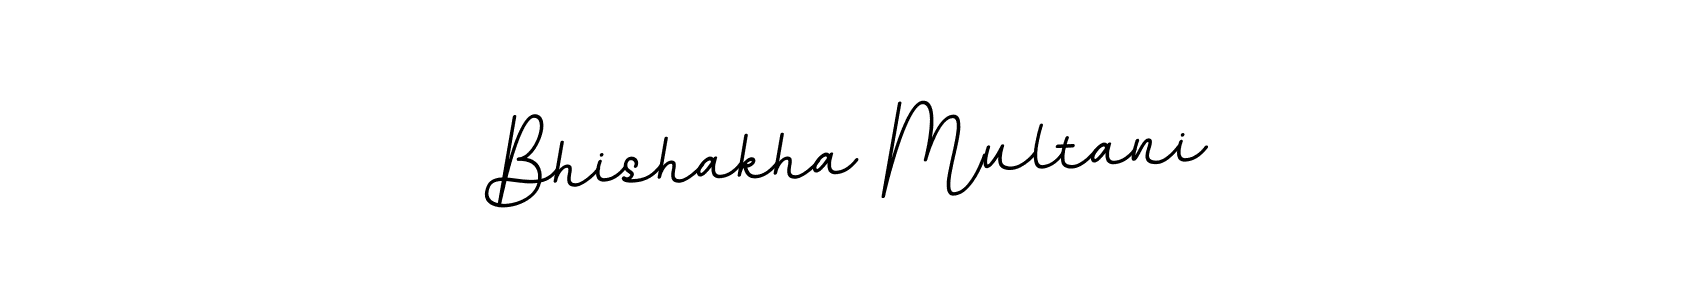 Make a beautiful signature design for name Bhishakha Multani. Use this online signature maker to create a handwritten signature for free. Bhishakha Multani signature style 11 images and pictures png